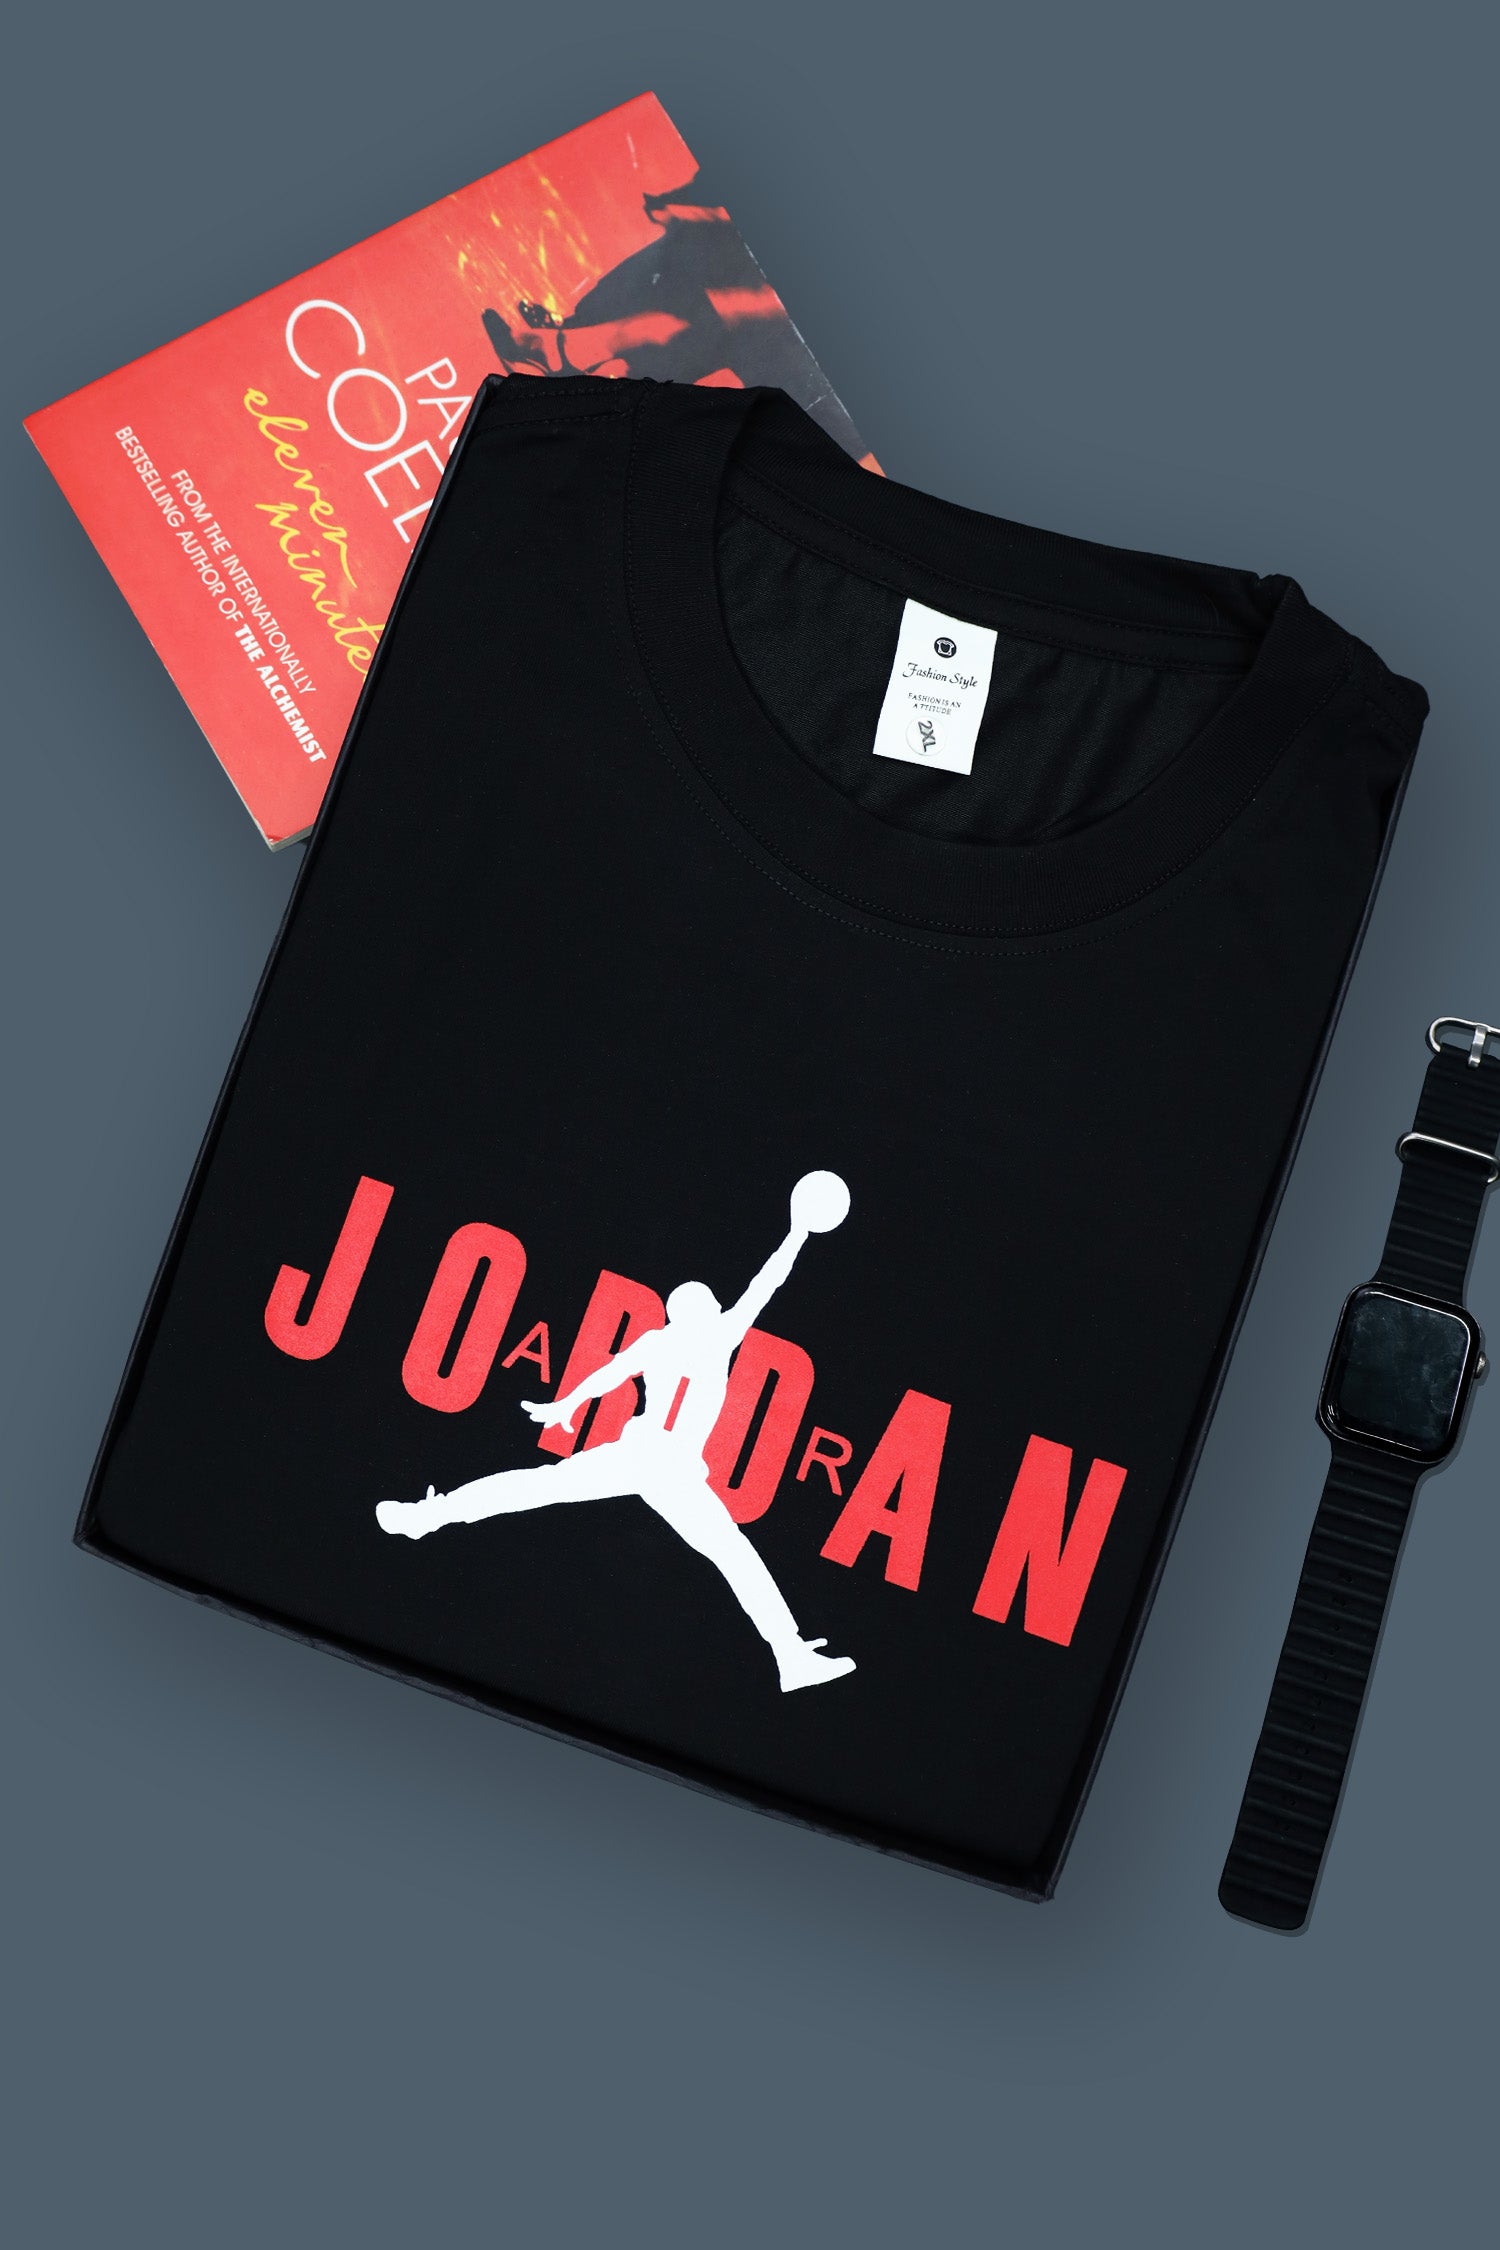 Jordn Front Logo Round Neck T-Shirt In Black